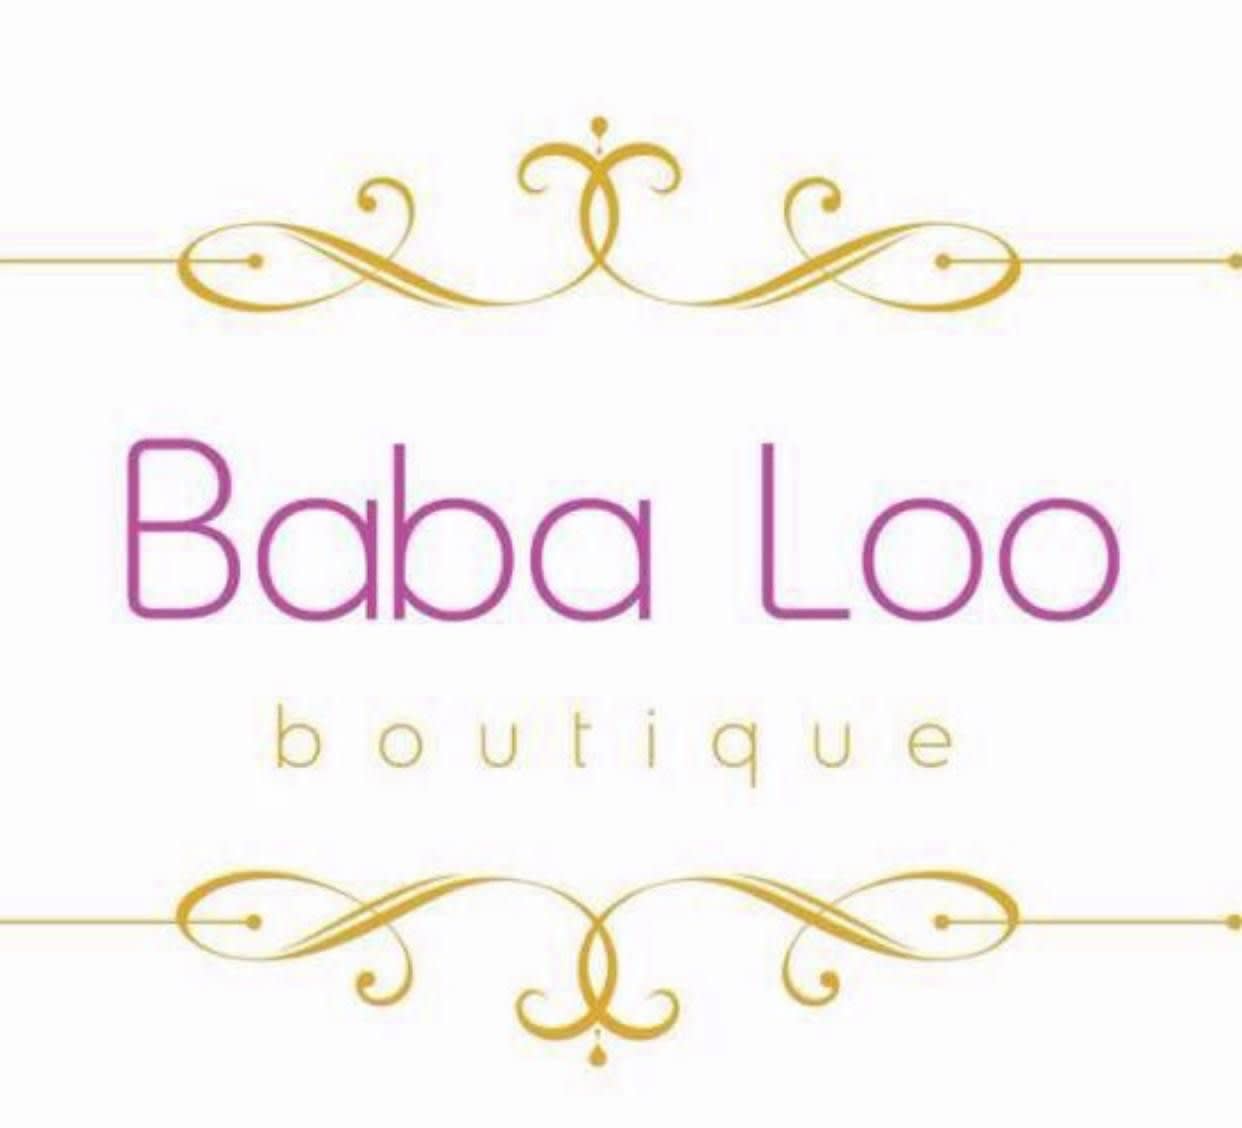 Boutique Babaloo